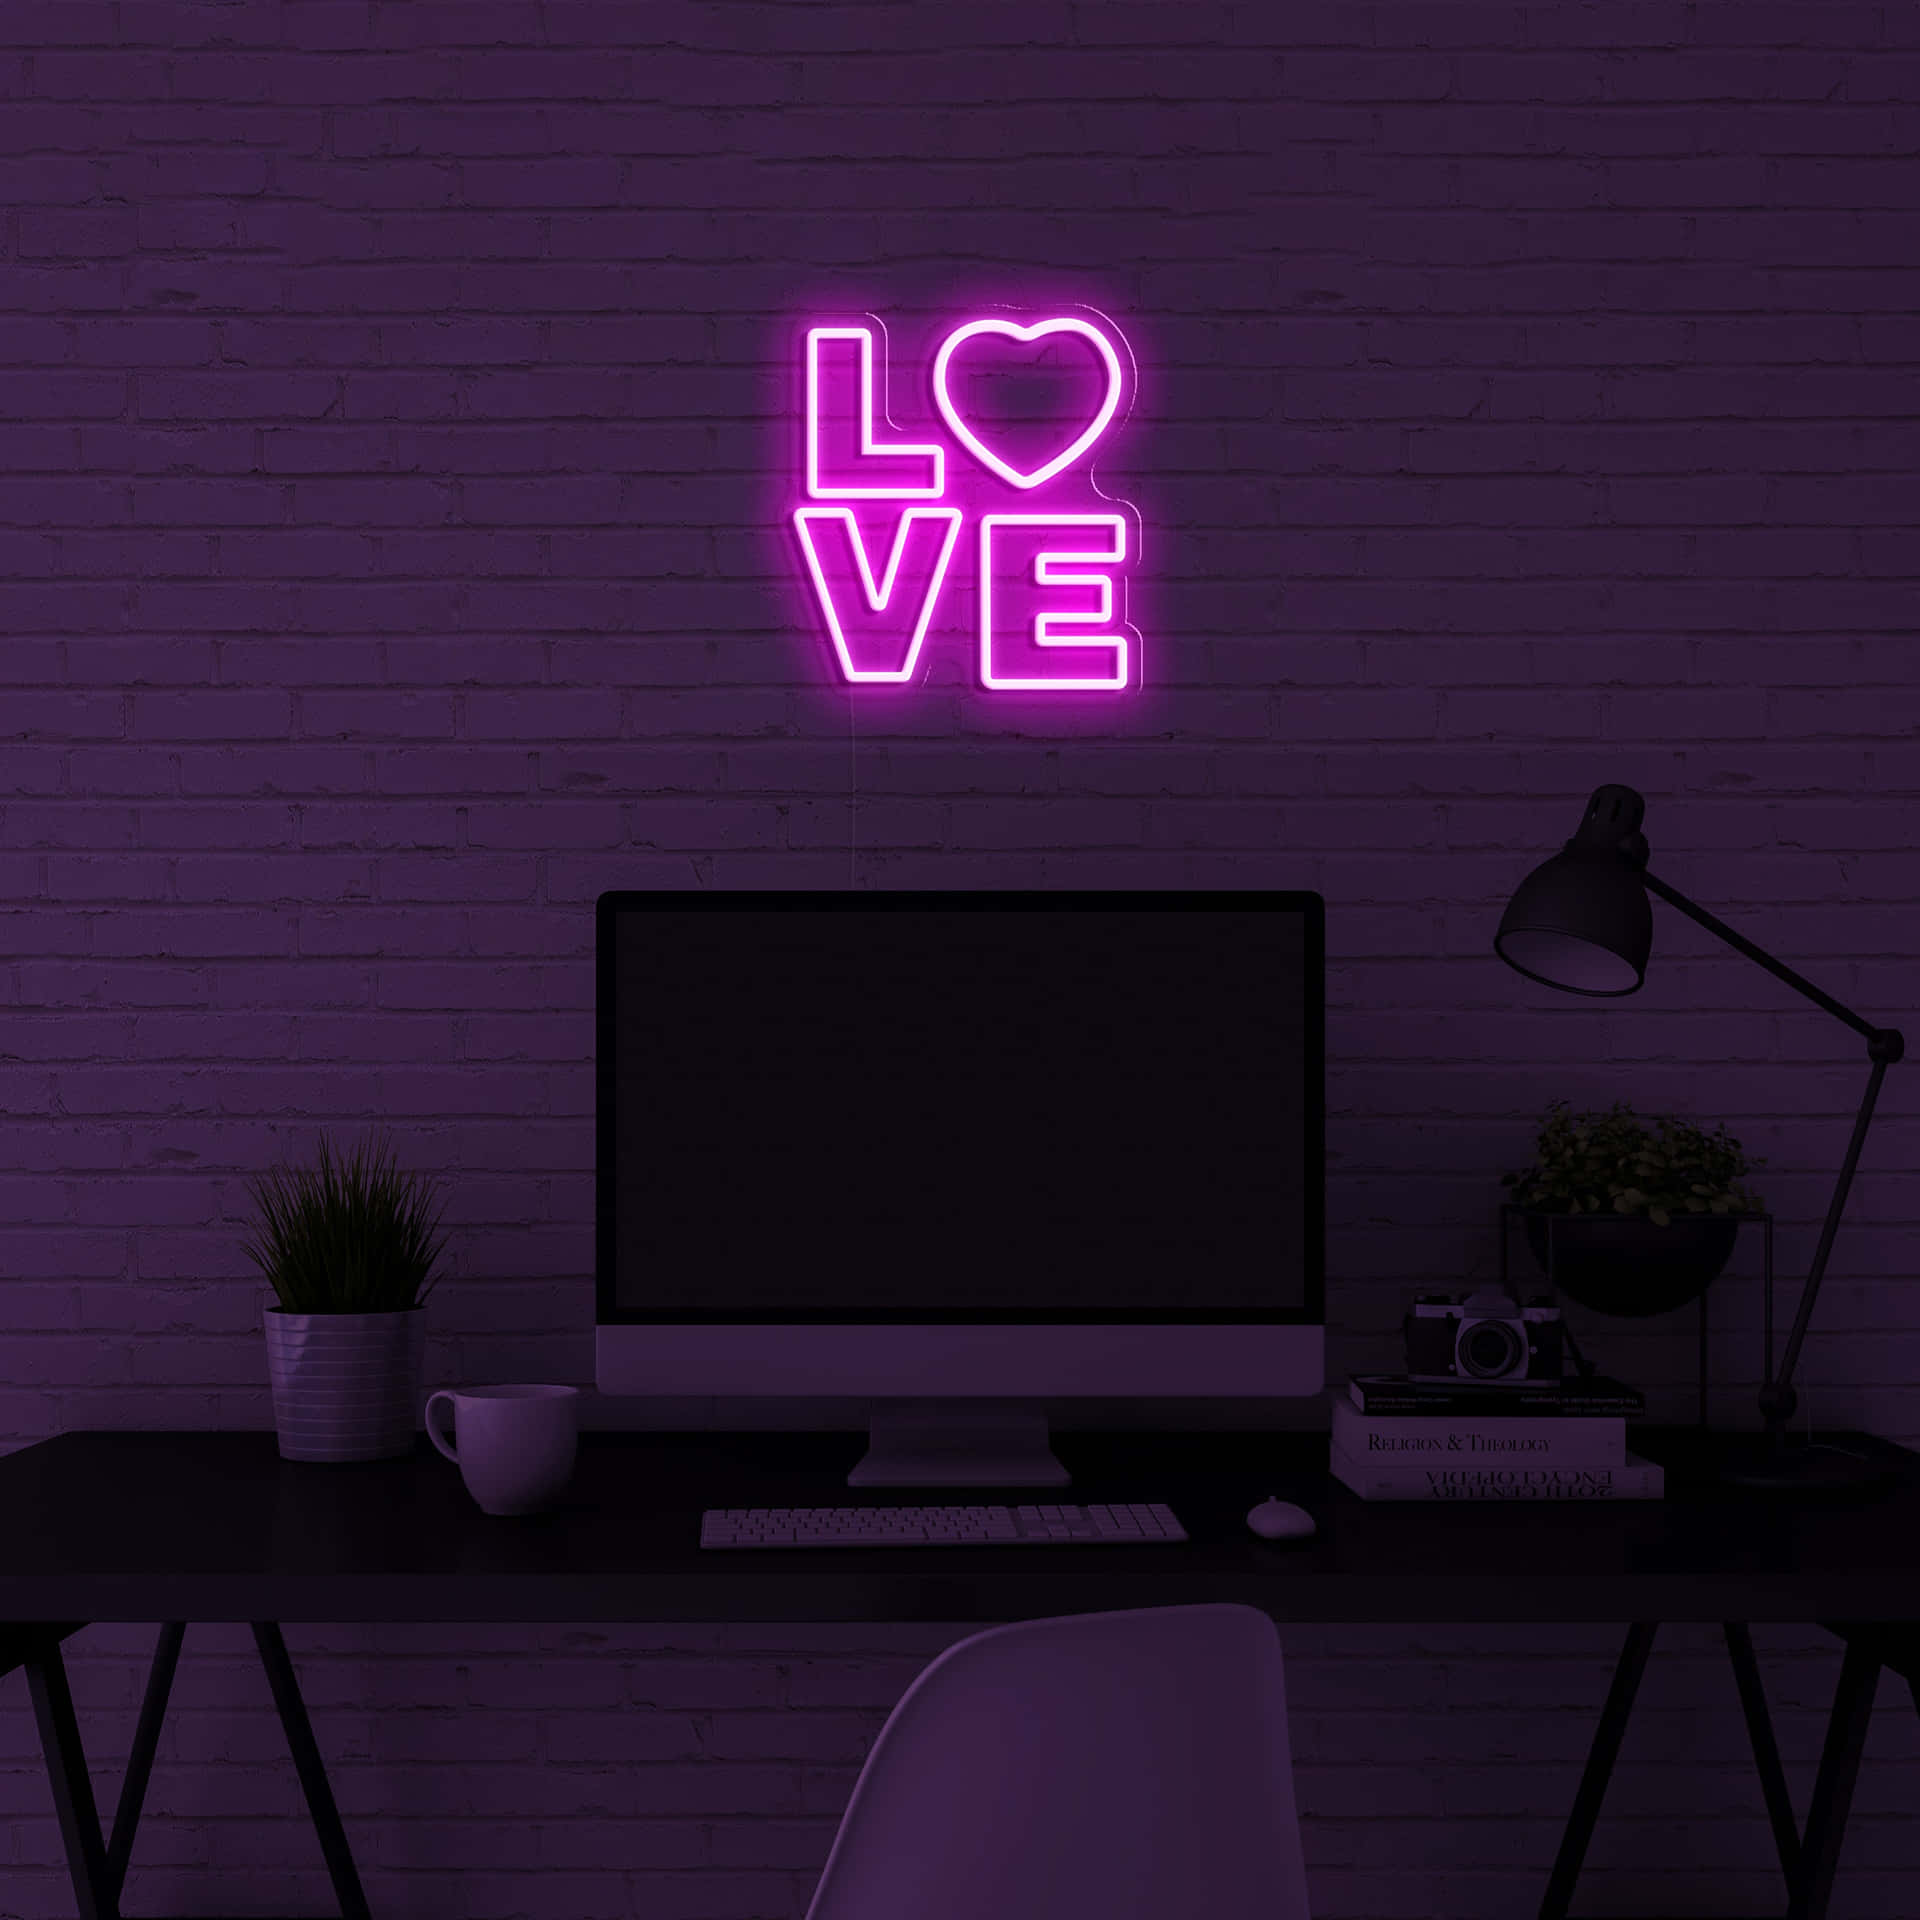 Genießensie Die Wunderschönen Beleuchtungseffekte Dieses Purple Neon Aesthetic Computers. Wallpaper